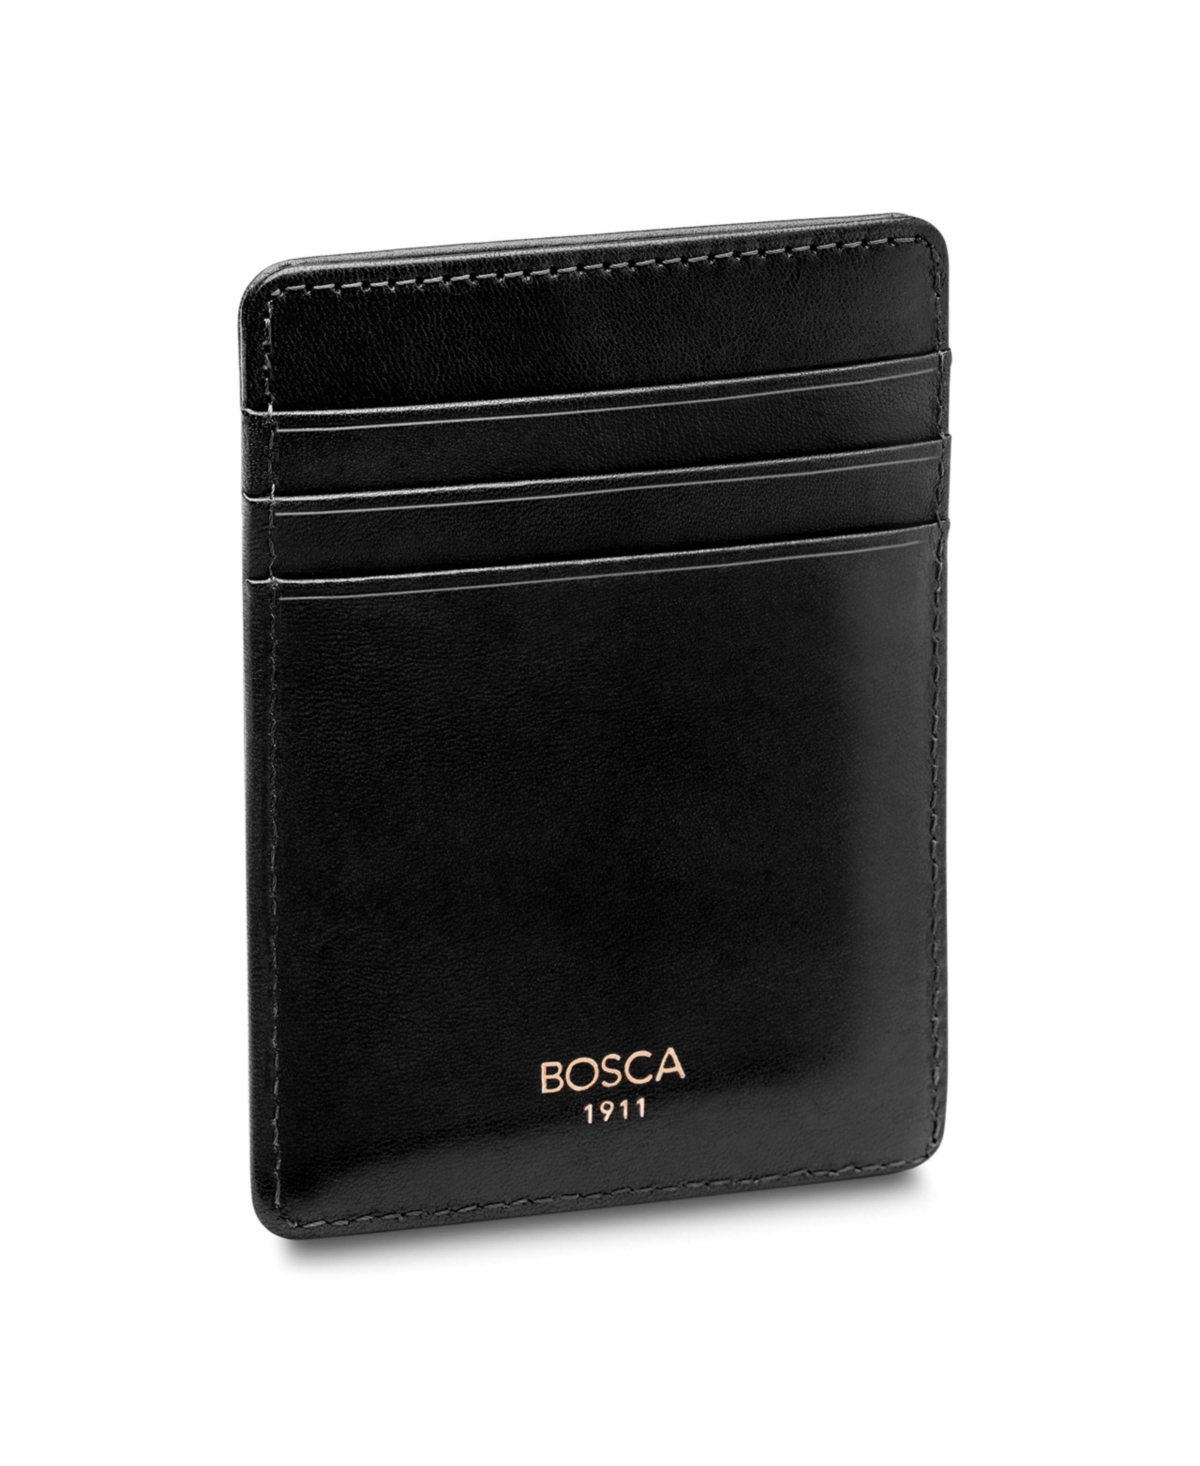 Old Leather Deluxe Front Pocket Wallet - Black